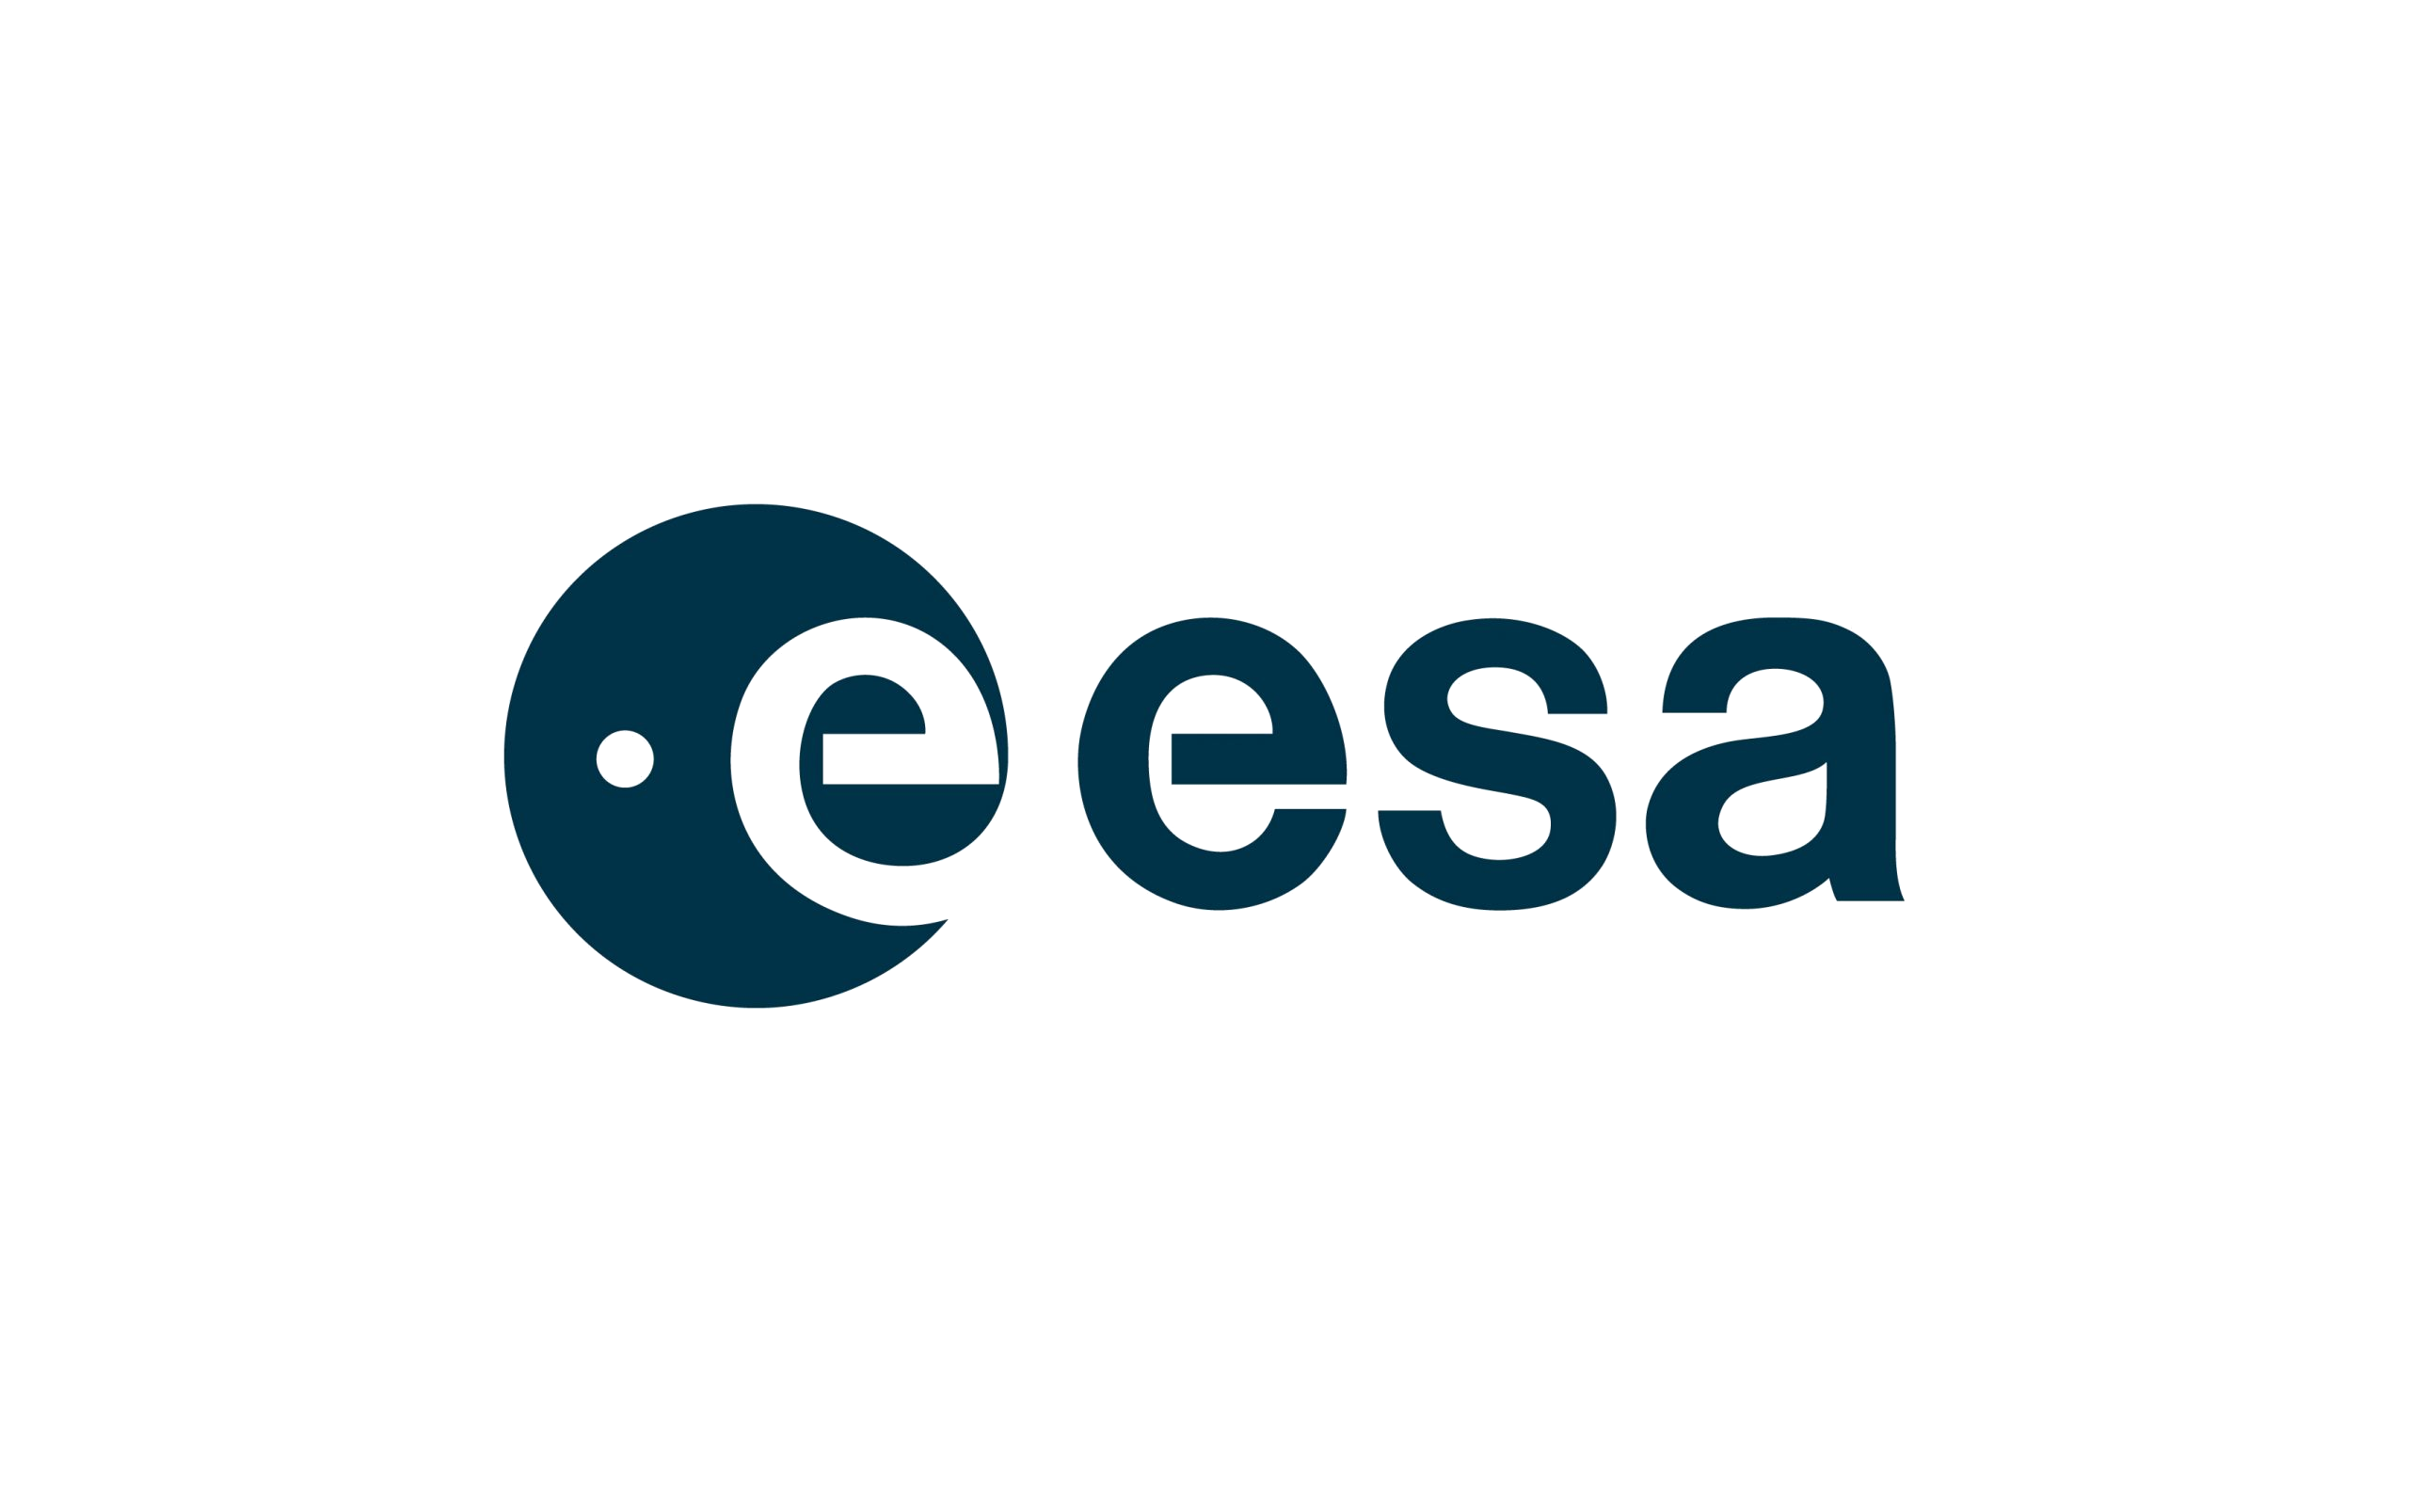 European Space Agency's logo